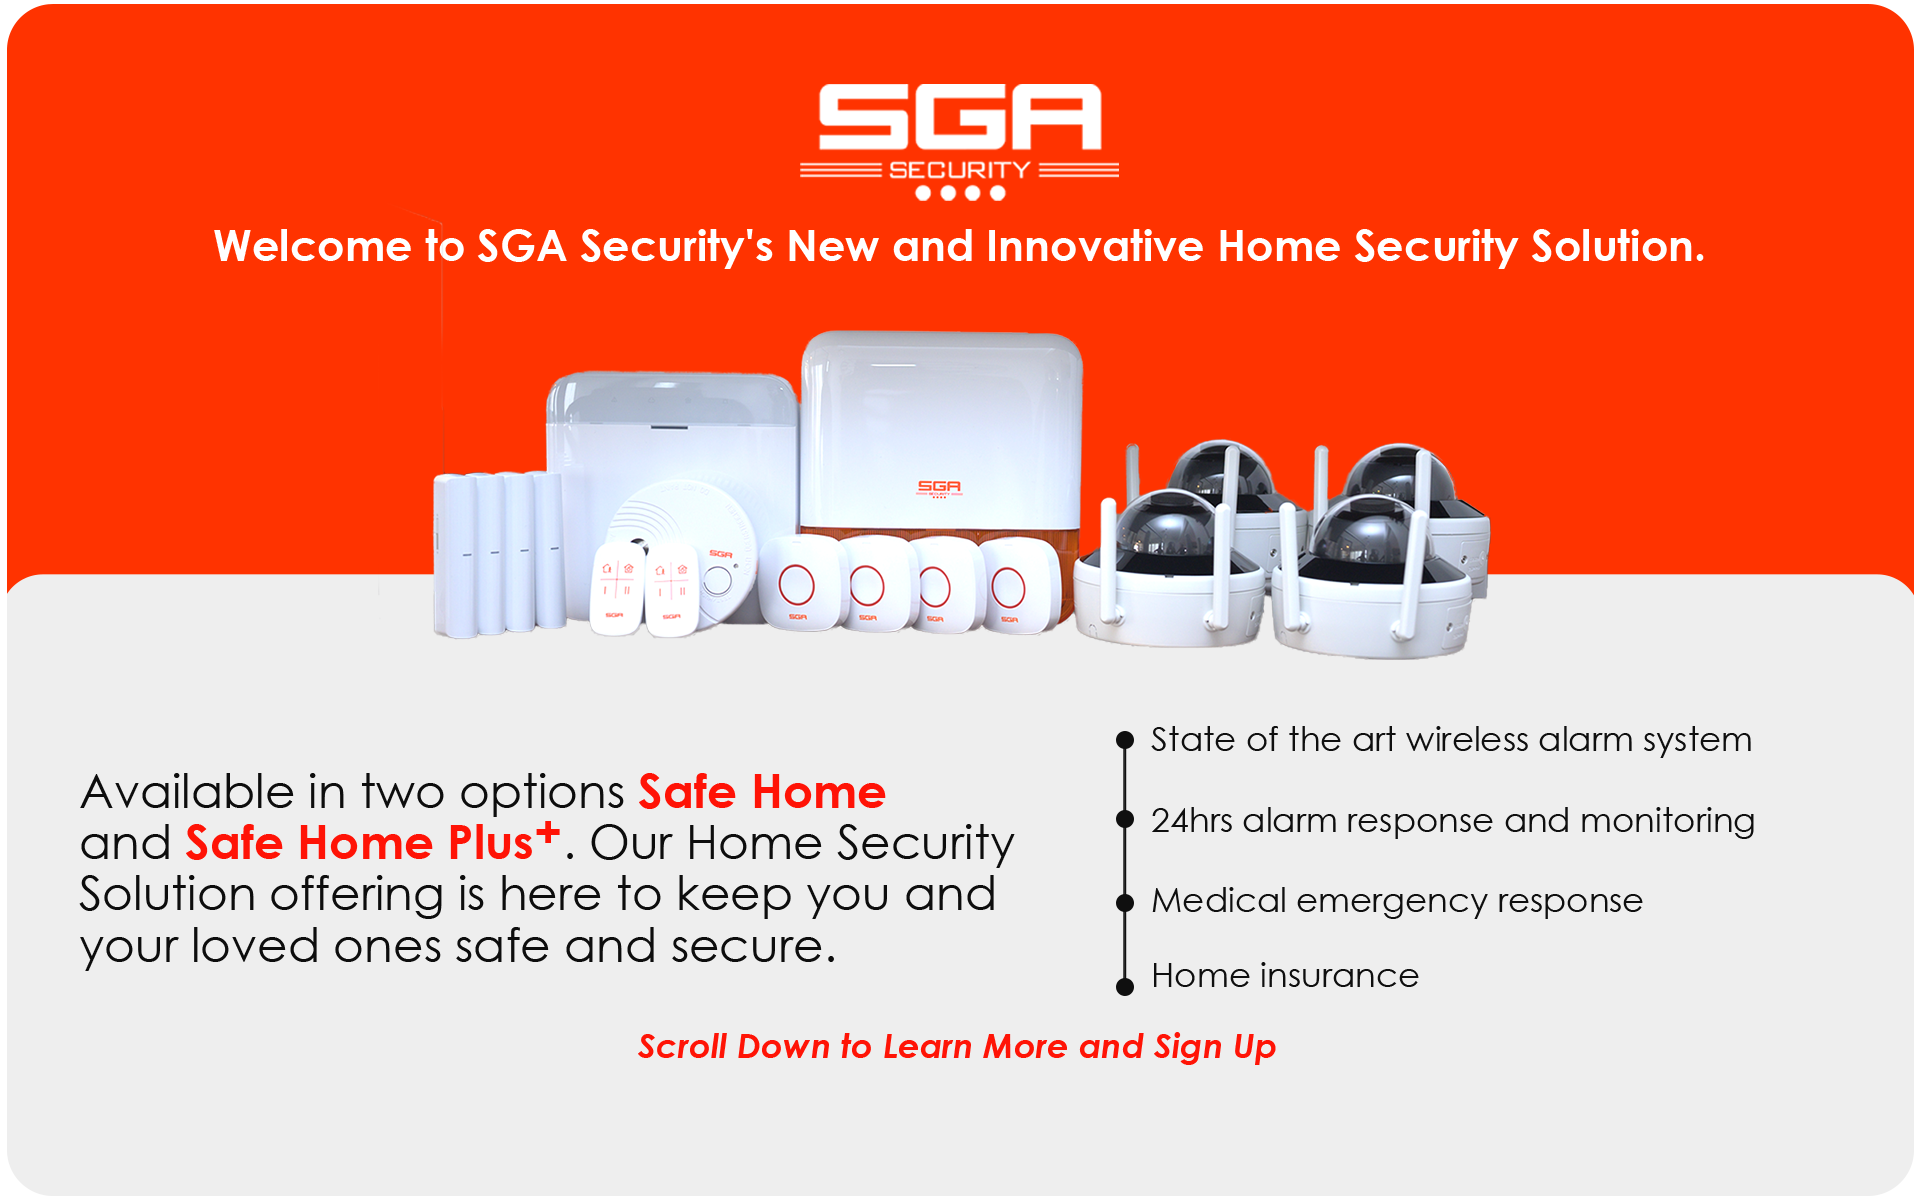 SGA Home Security Solution